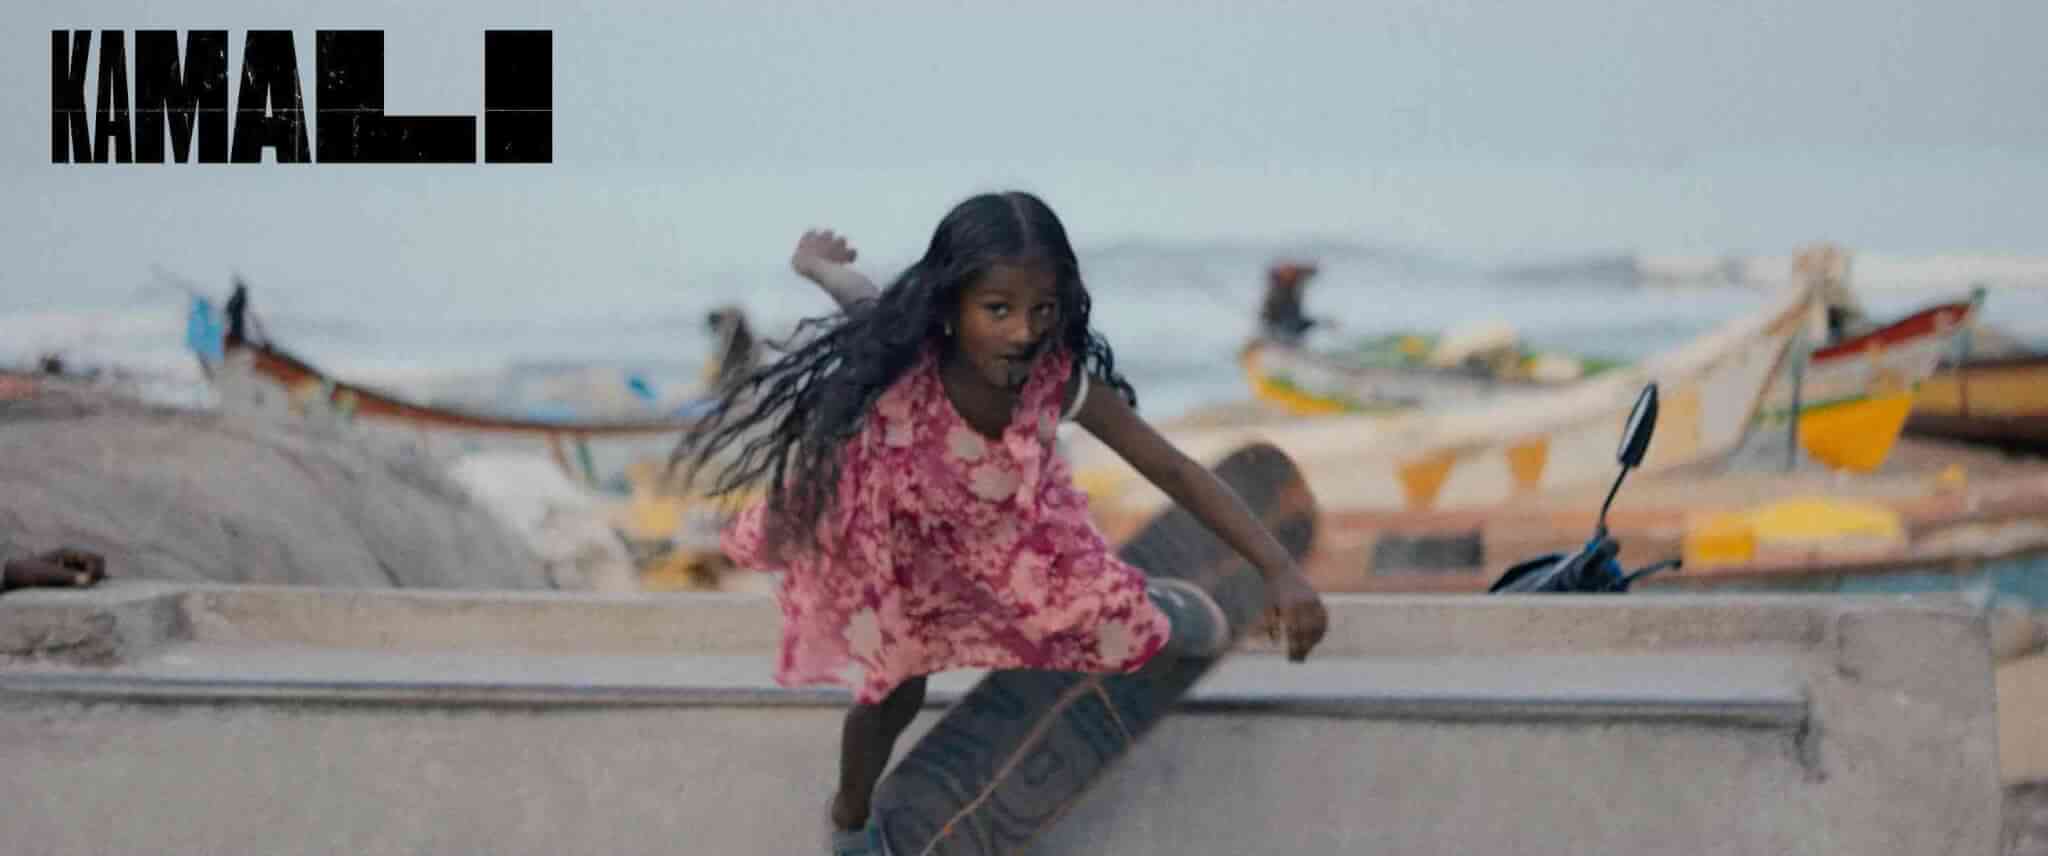 Kamali Moorthy, Skater Girl from India